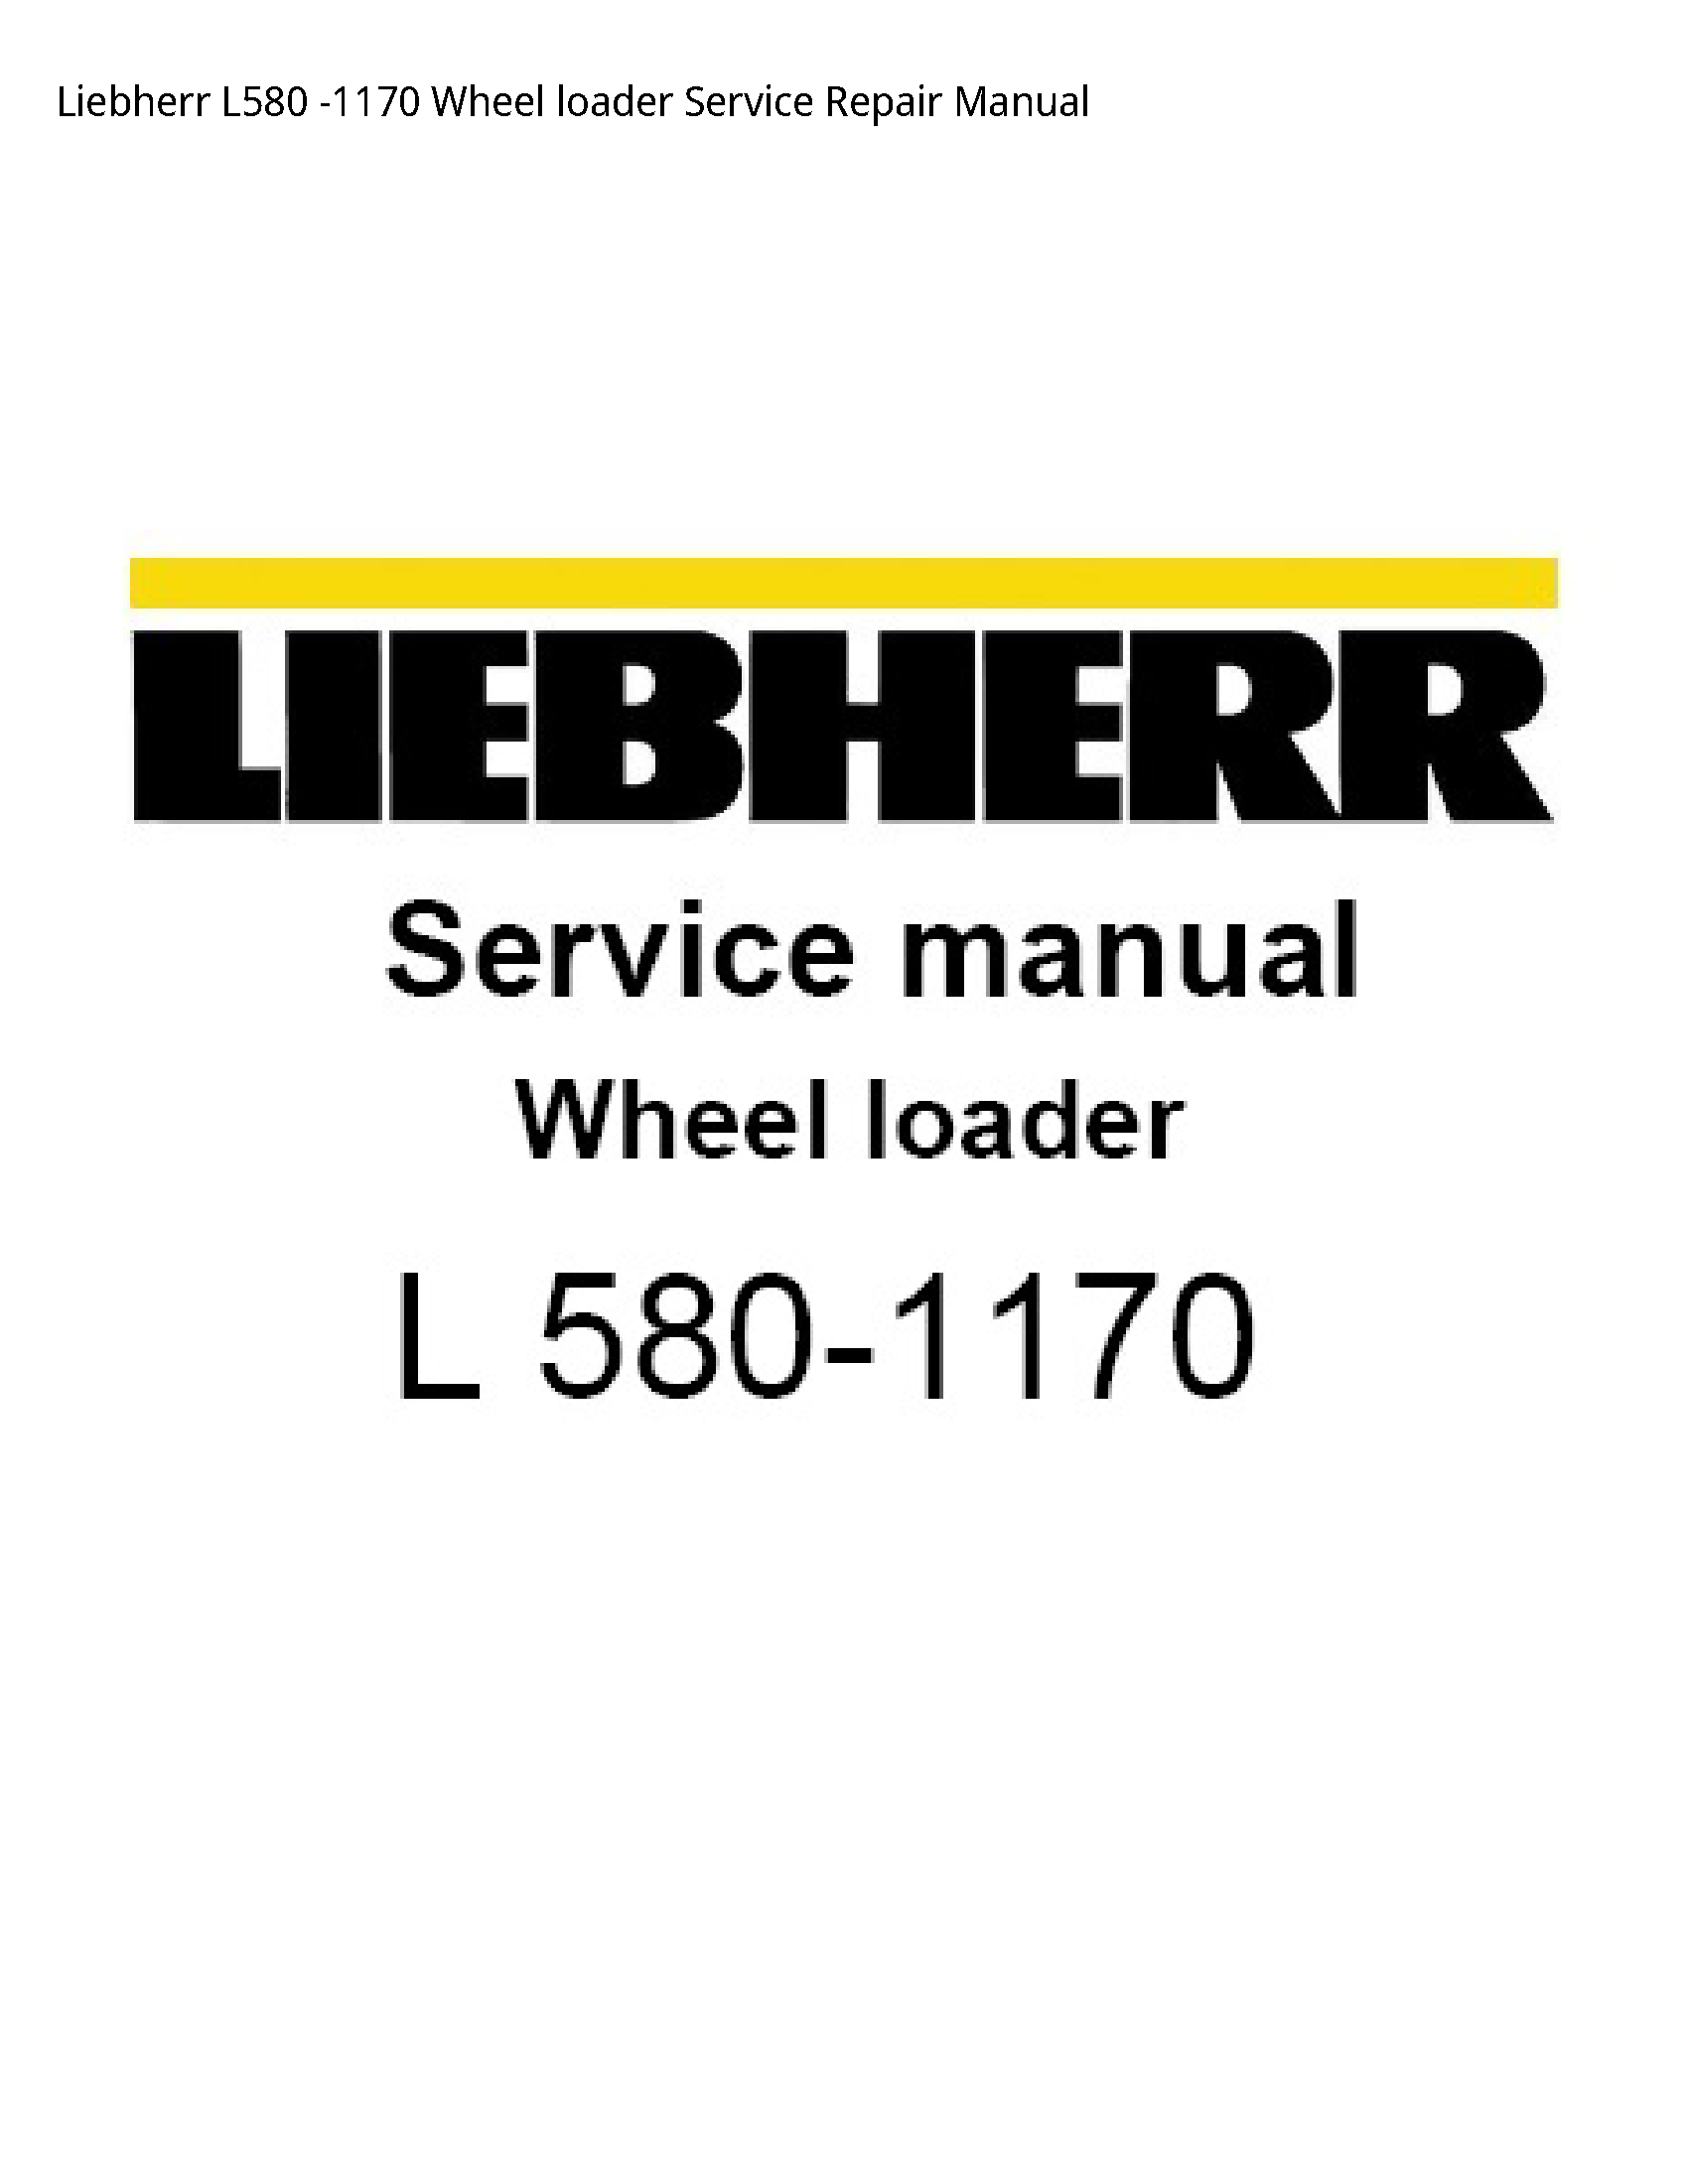 Liebherr L580 Wheel loader manual